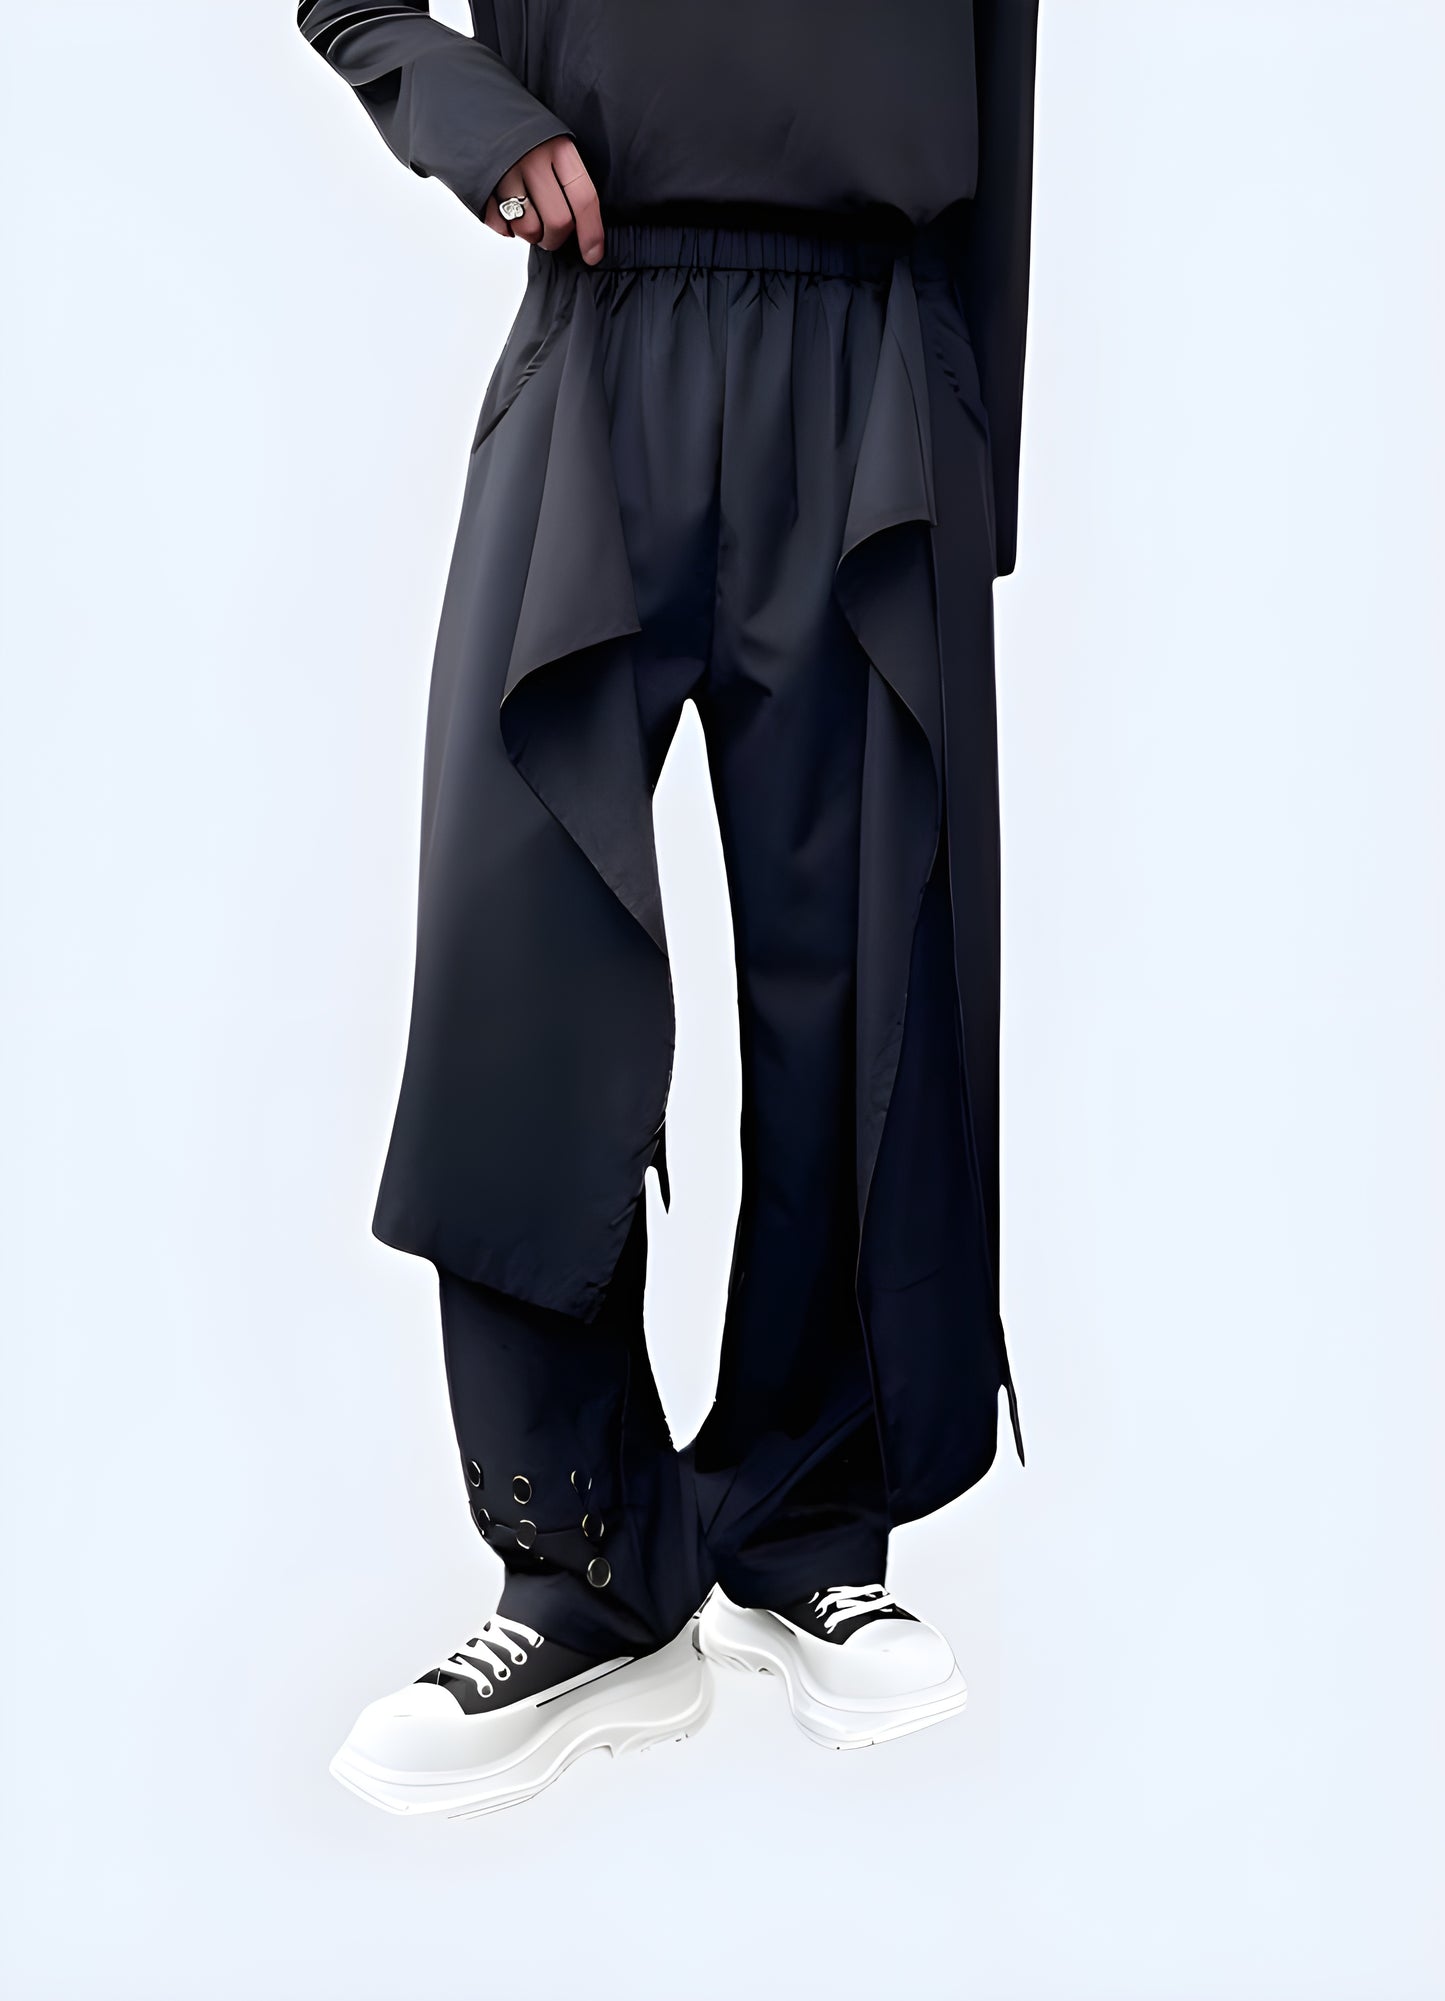 Modern japanese style pants black hakama pants.